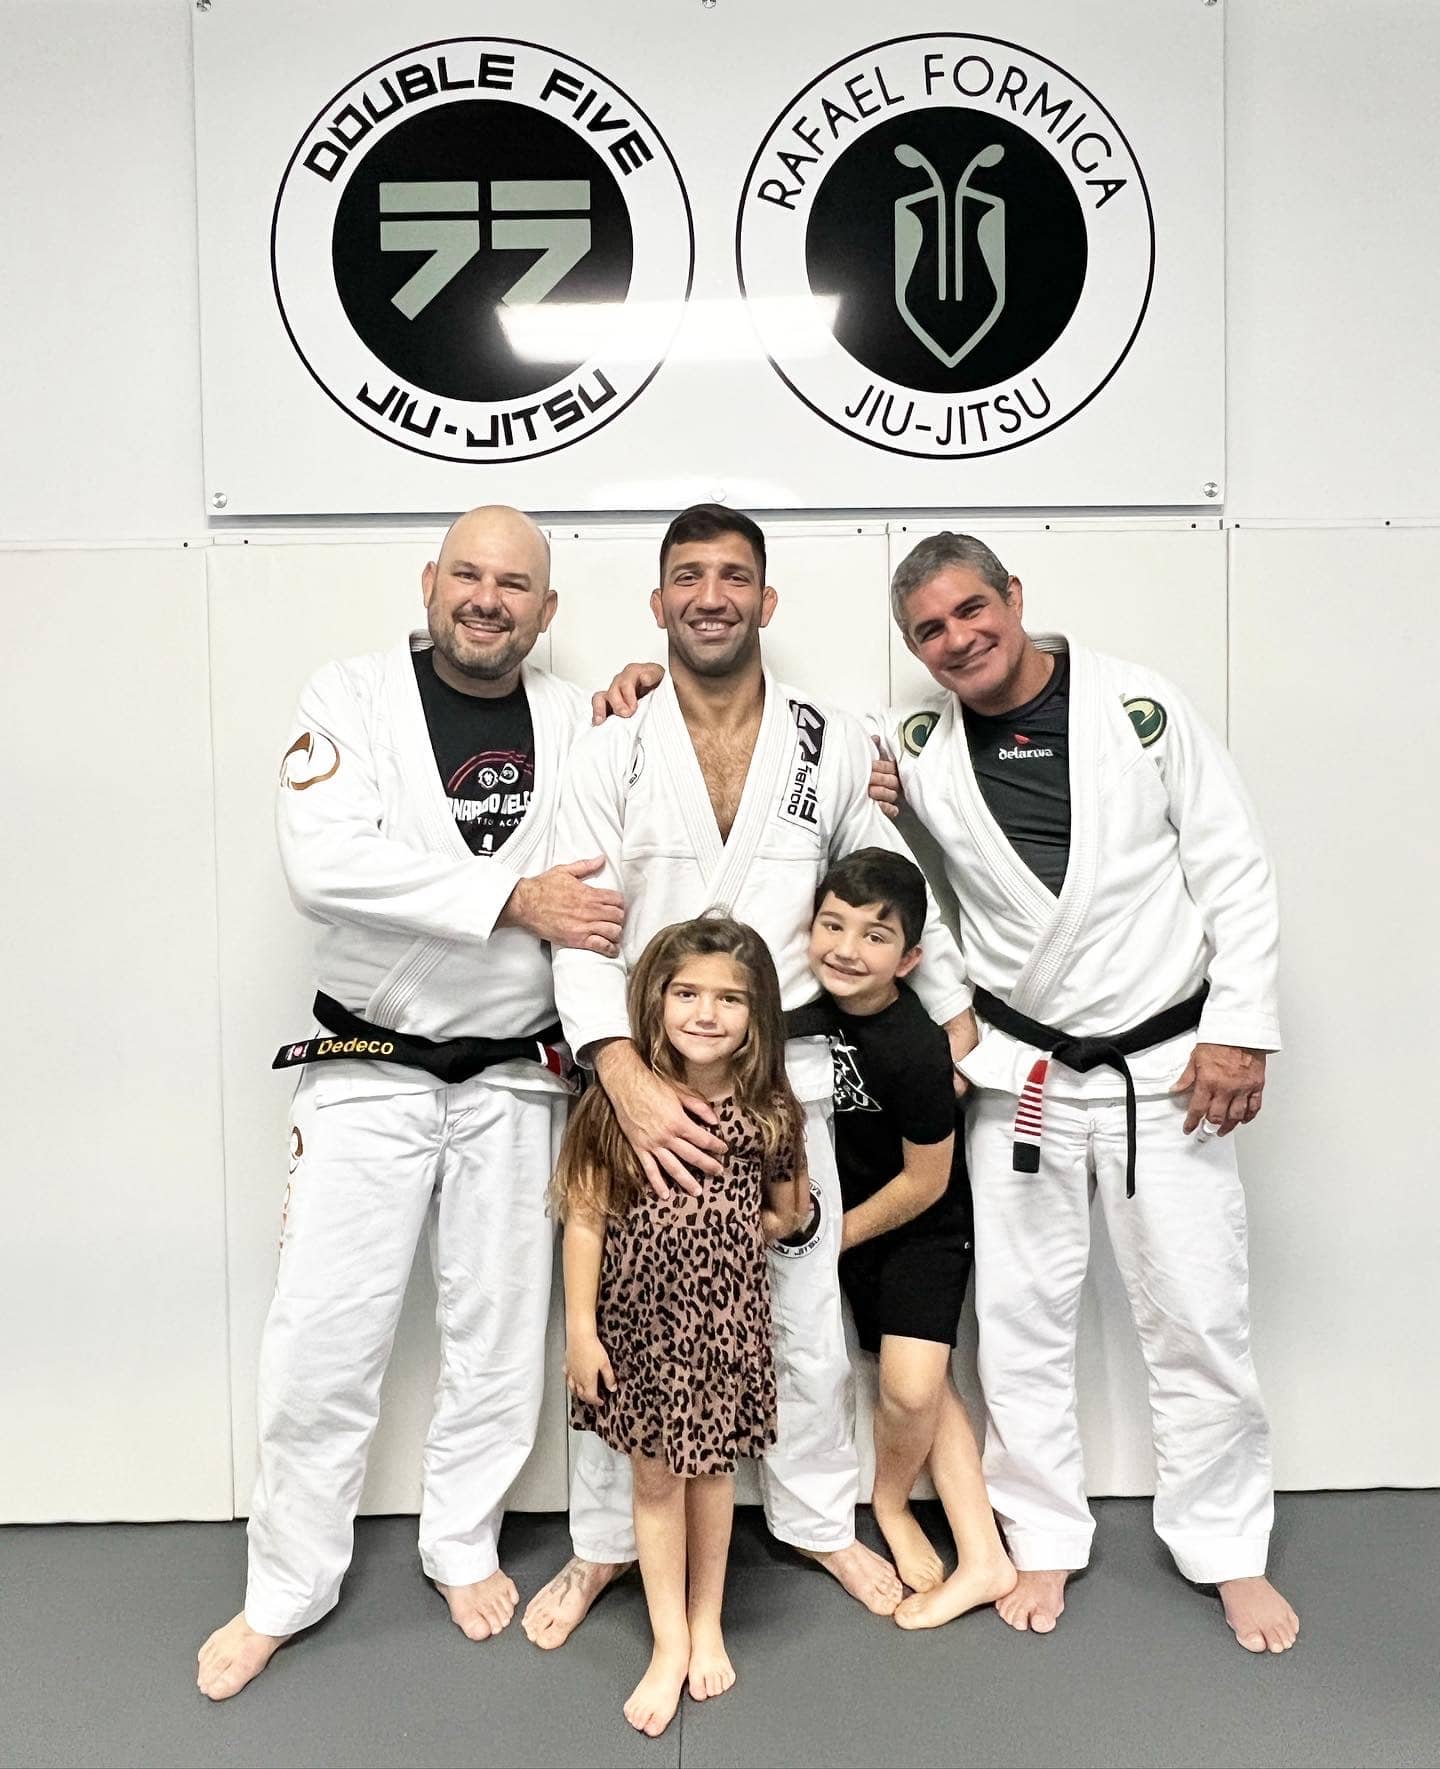 Double Five Jiu-Jitsu Rafael Formiga Academy About Us